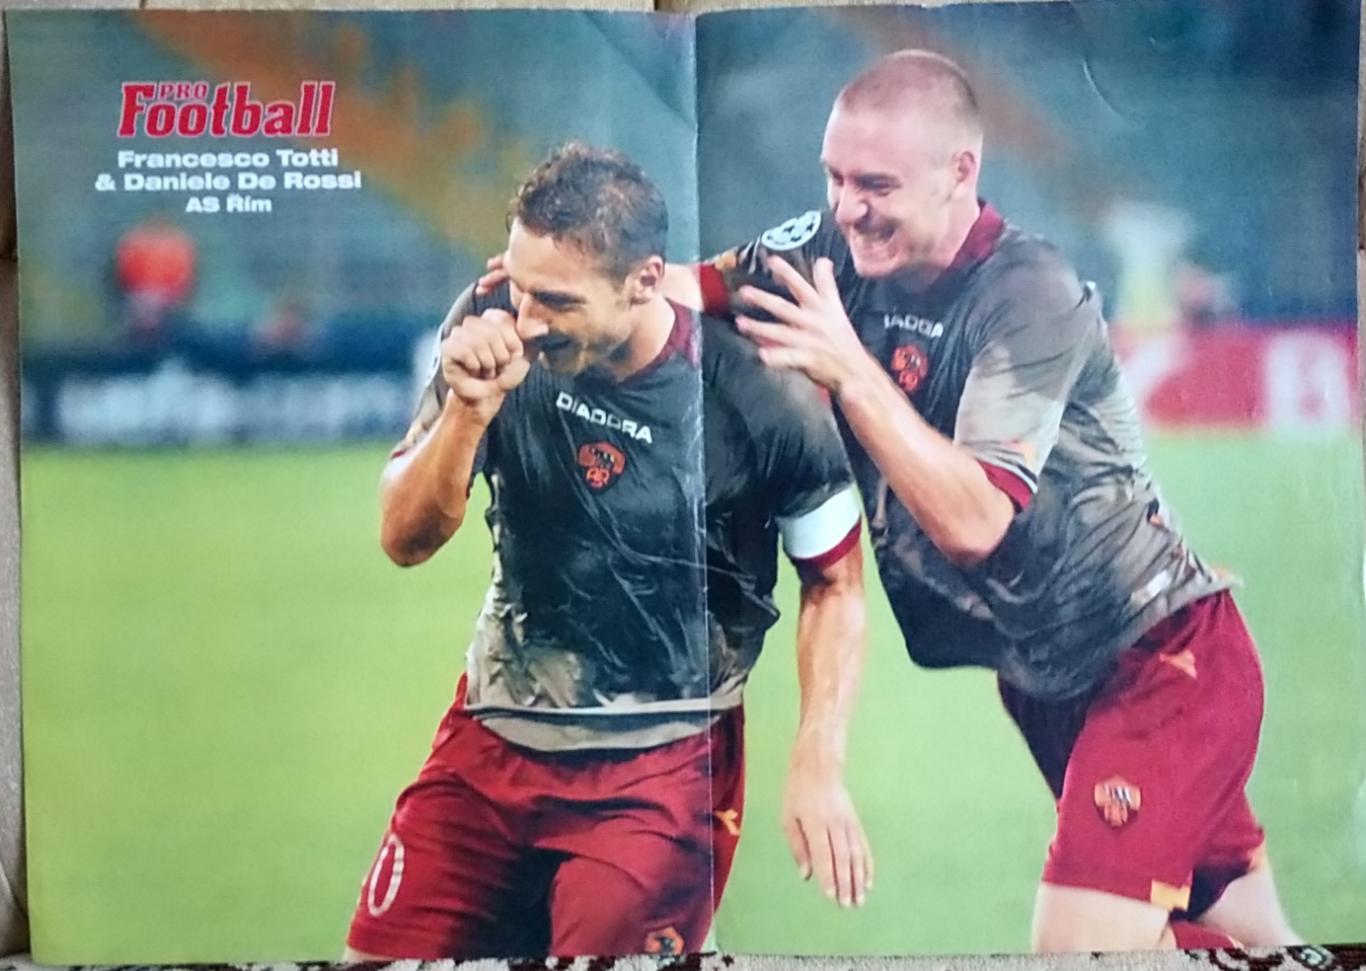 Футбол. Постер з журналу Pro Football, Тотті, Де Россі.